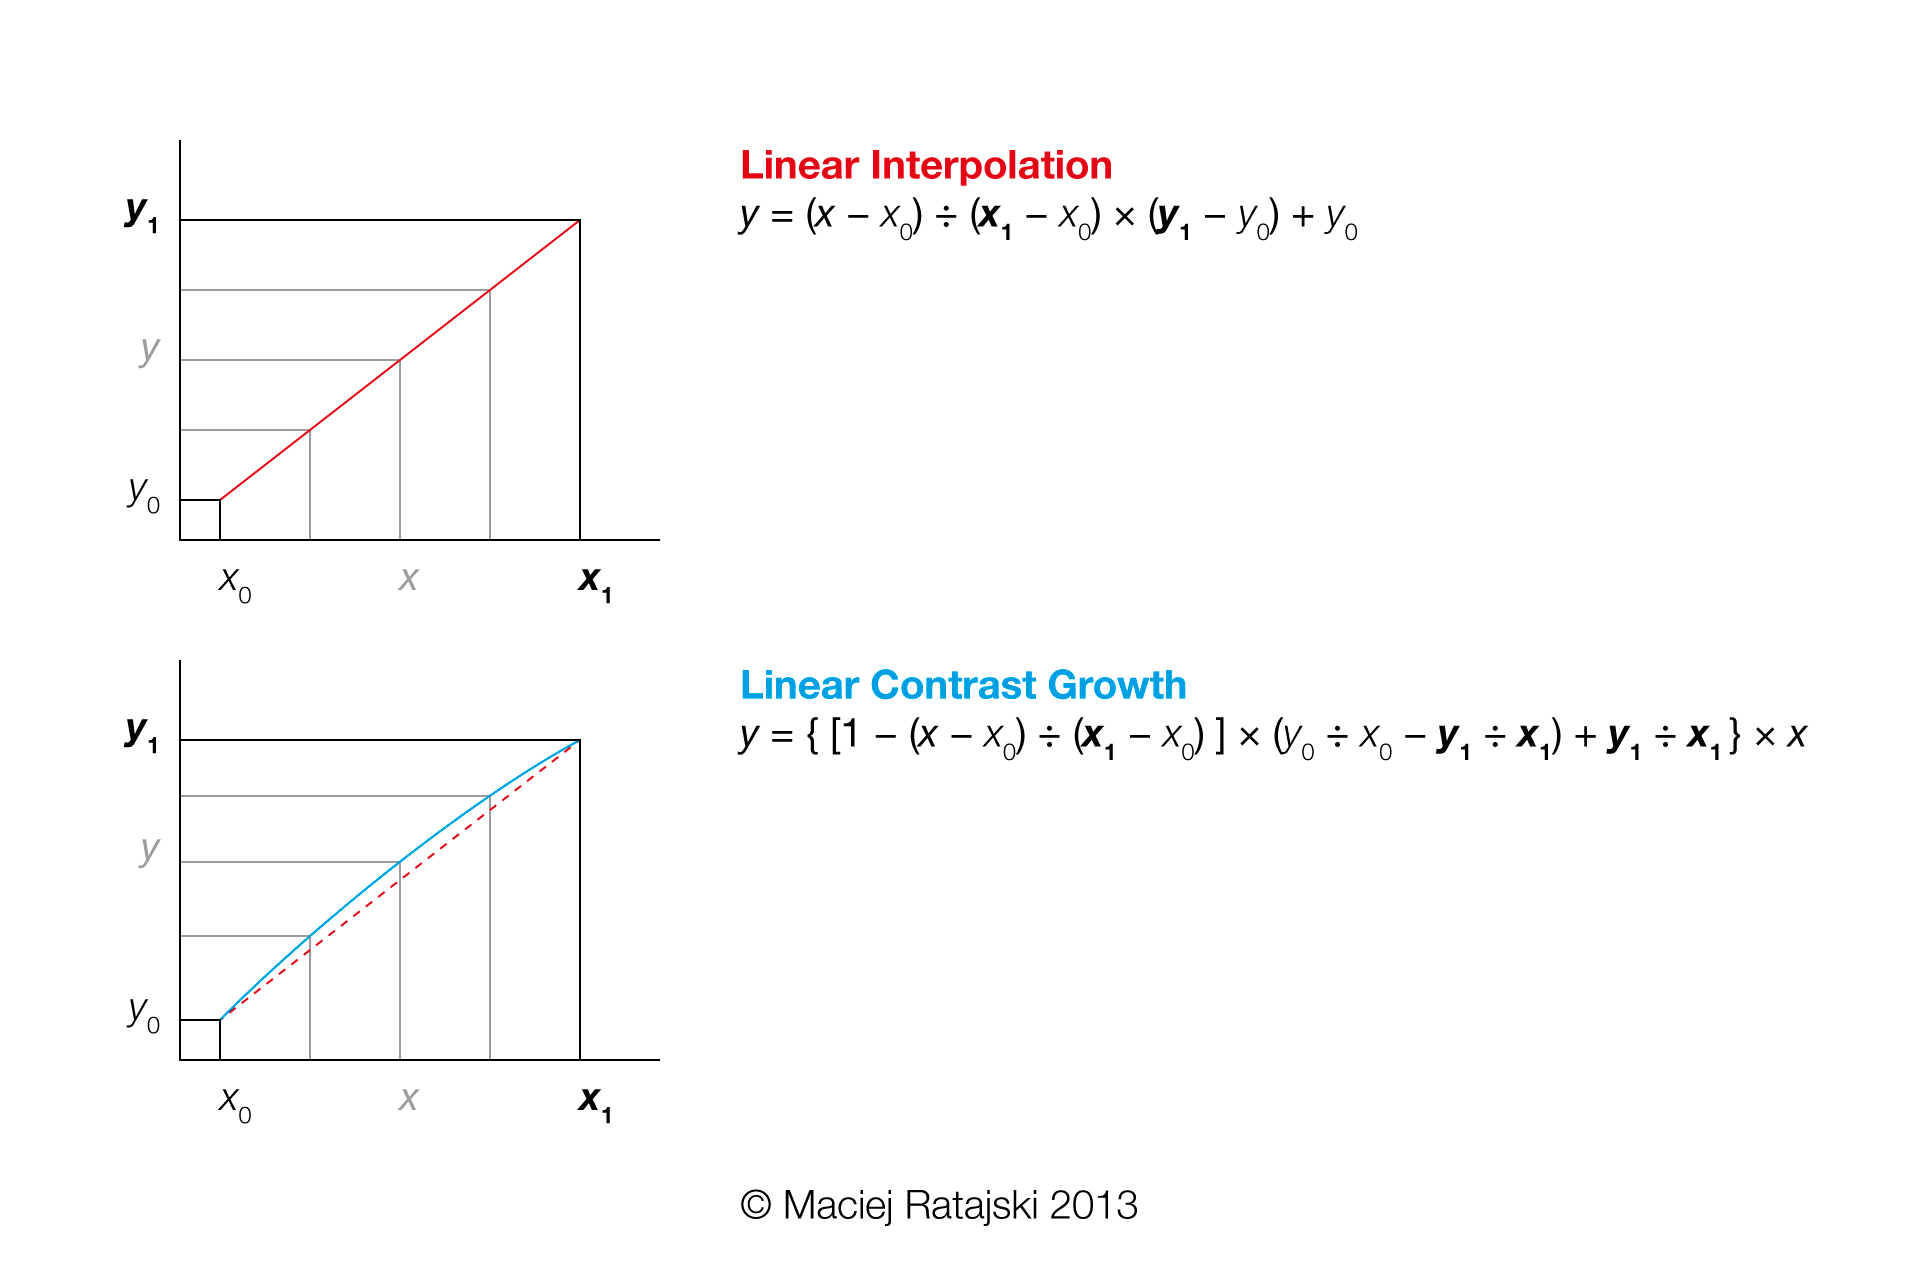 Linear Contrast Growth formula